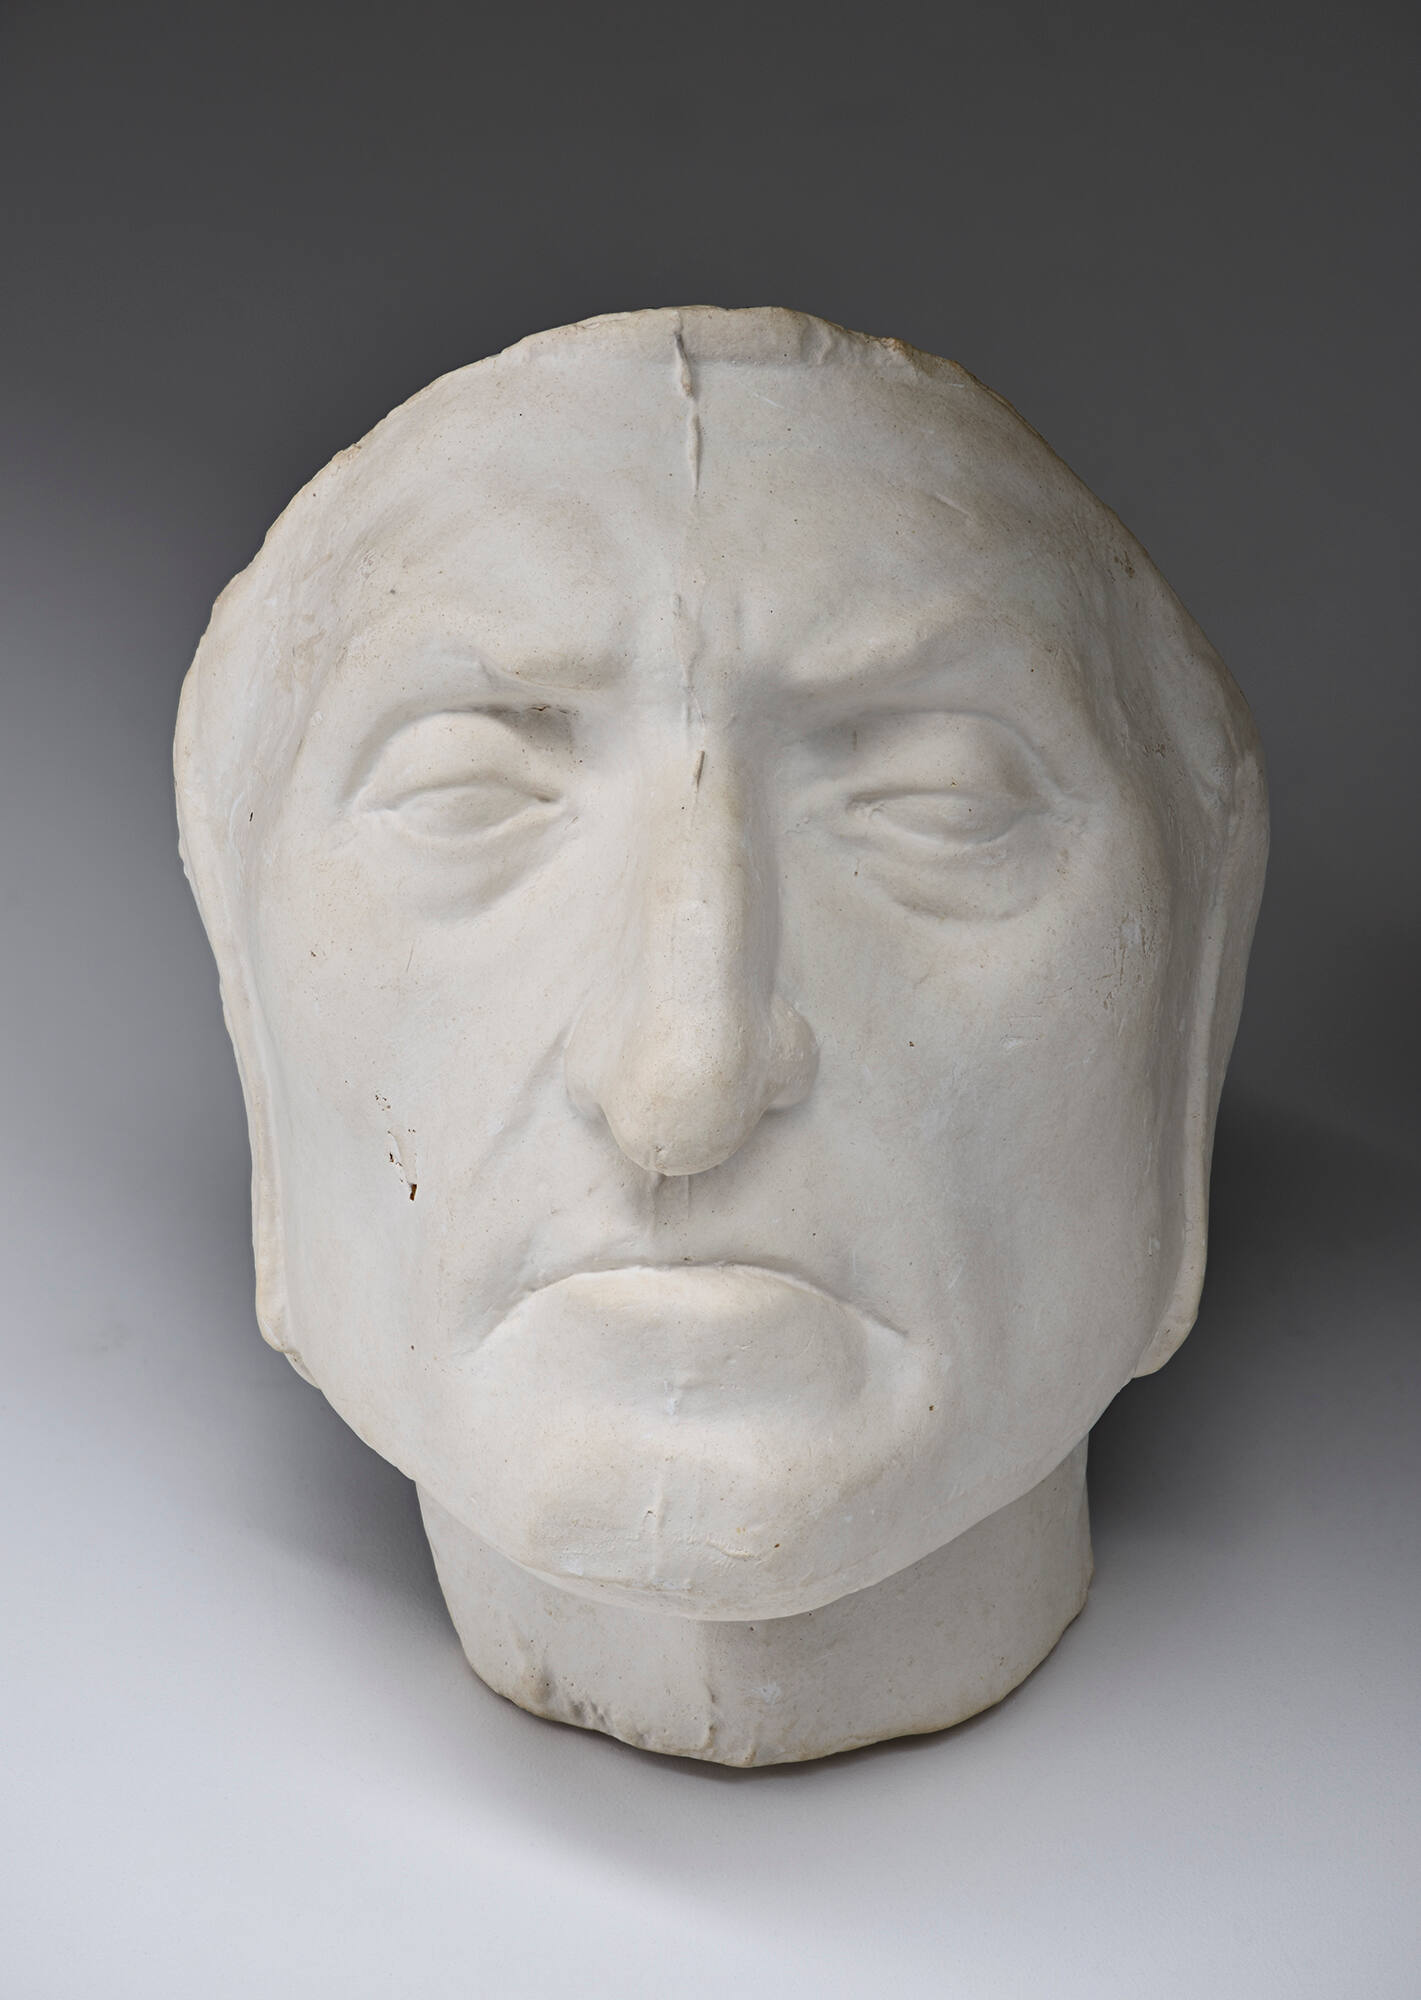 Copy of the "Death Mask" of Dante Alighieri | Isabella Stewart Gardner  Museum